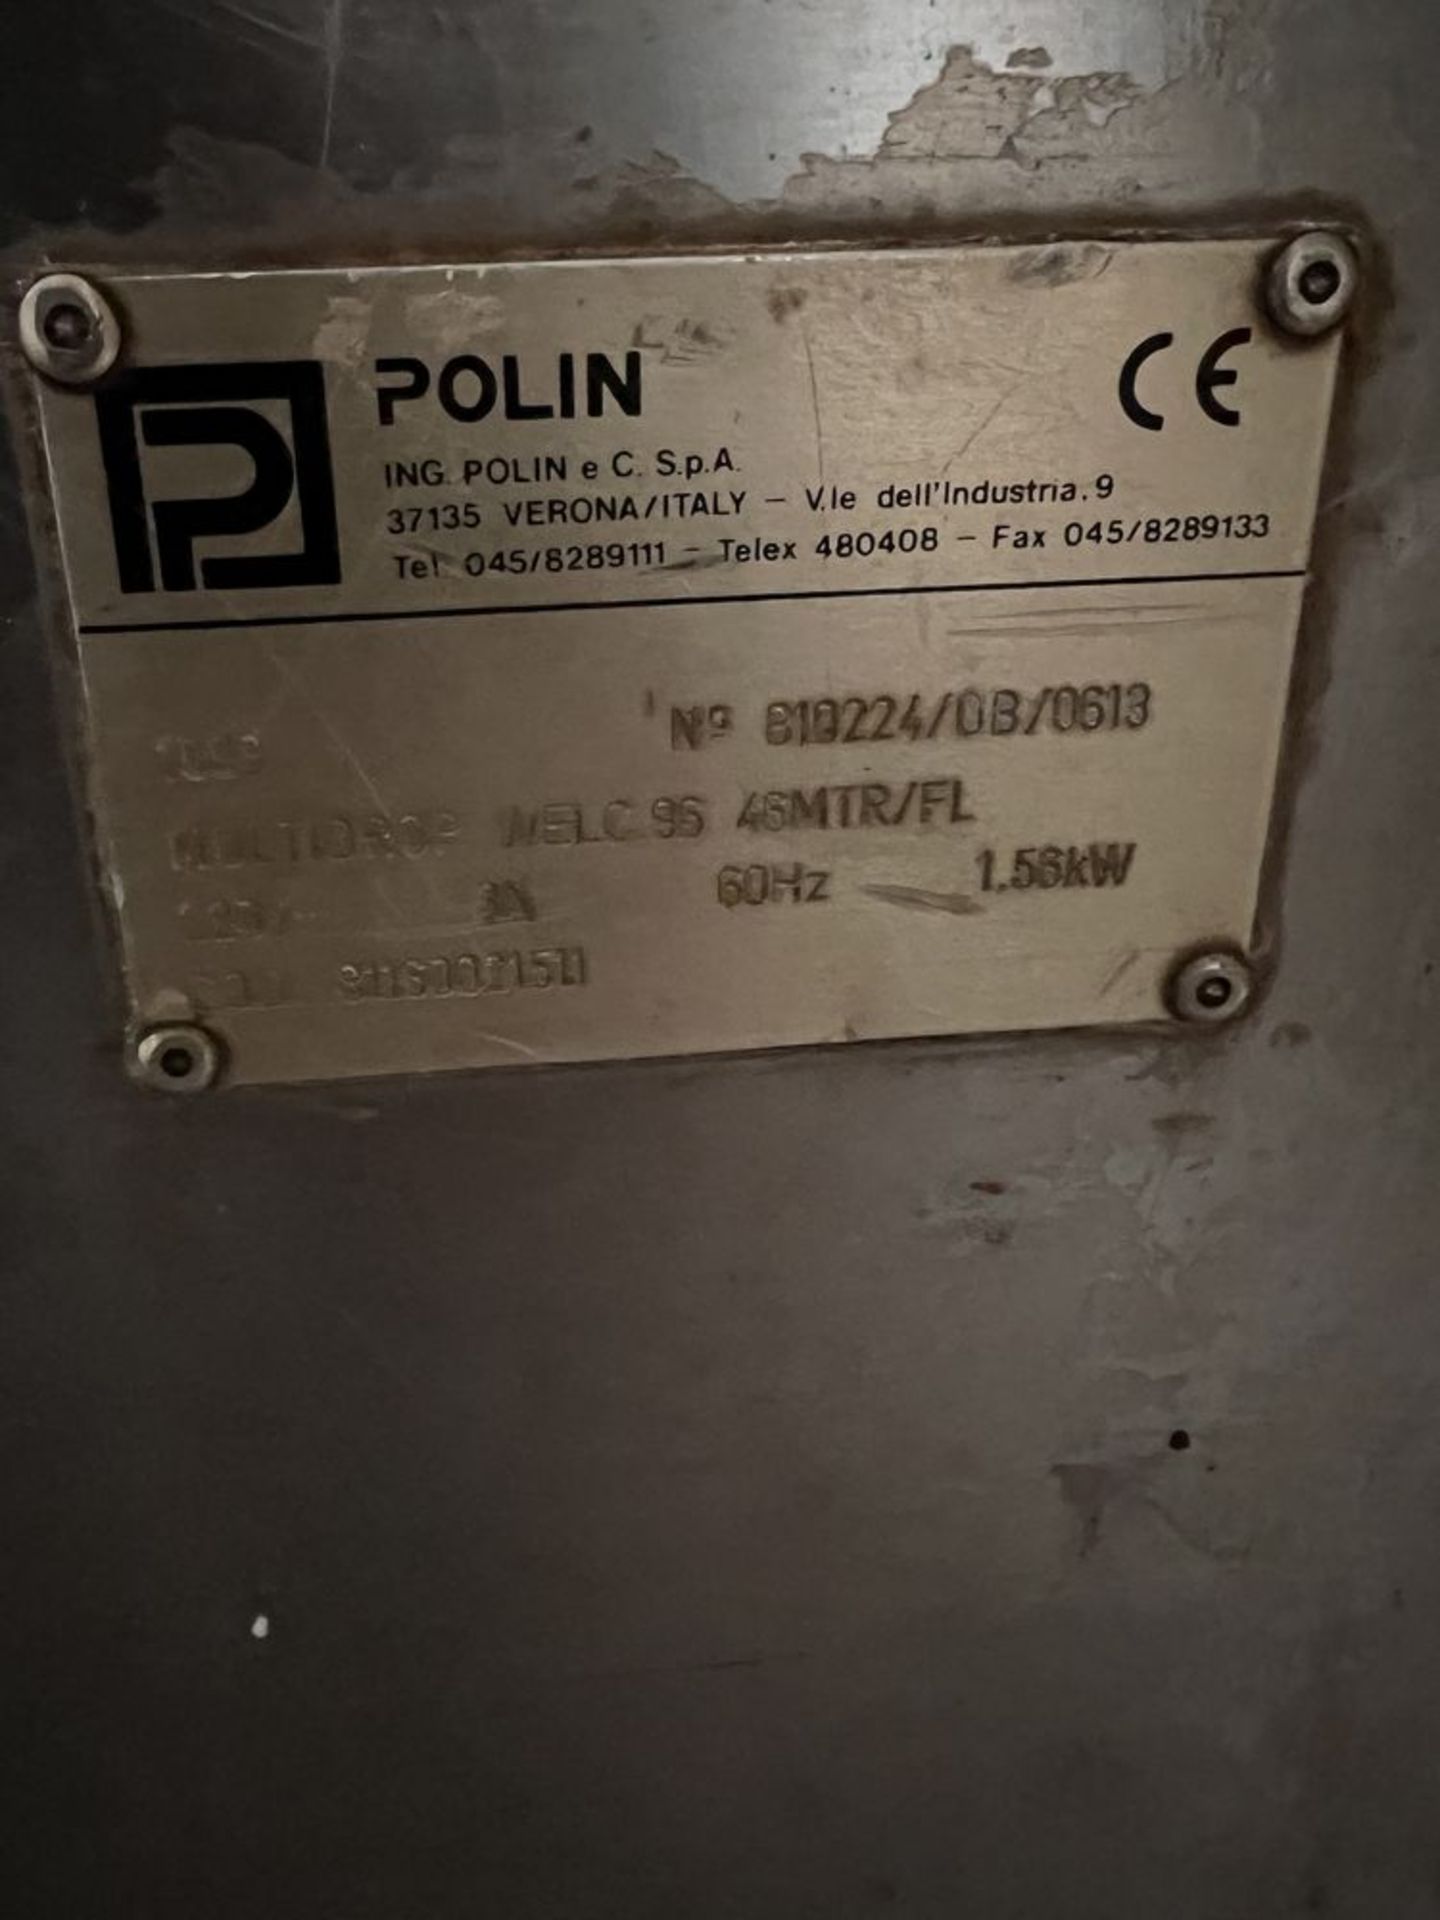 POLIN MULTI-DROP DEPOSITOR, MODEL MULTIDROP WELC.96 46 MTR/FL, S/N B10224/OB/0613, 220V - Bild 8 aus 9